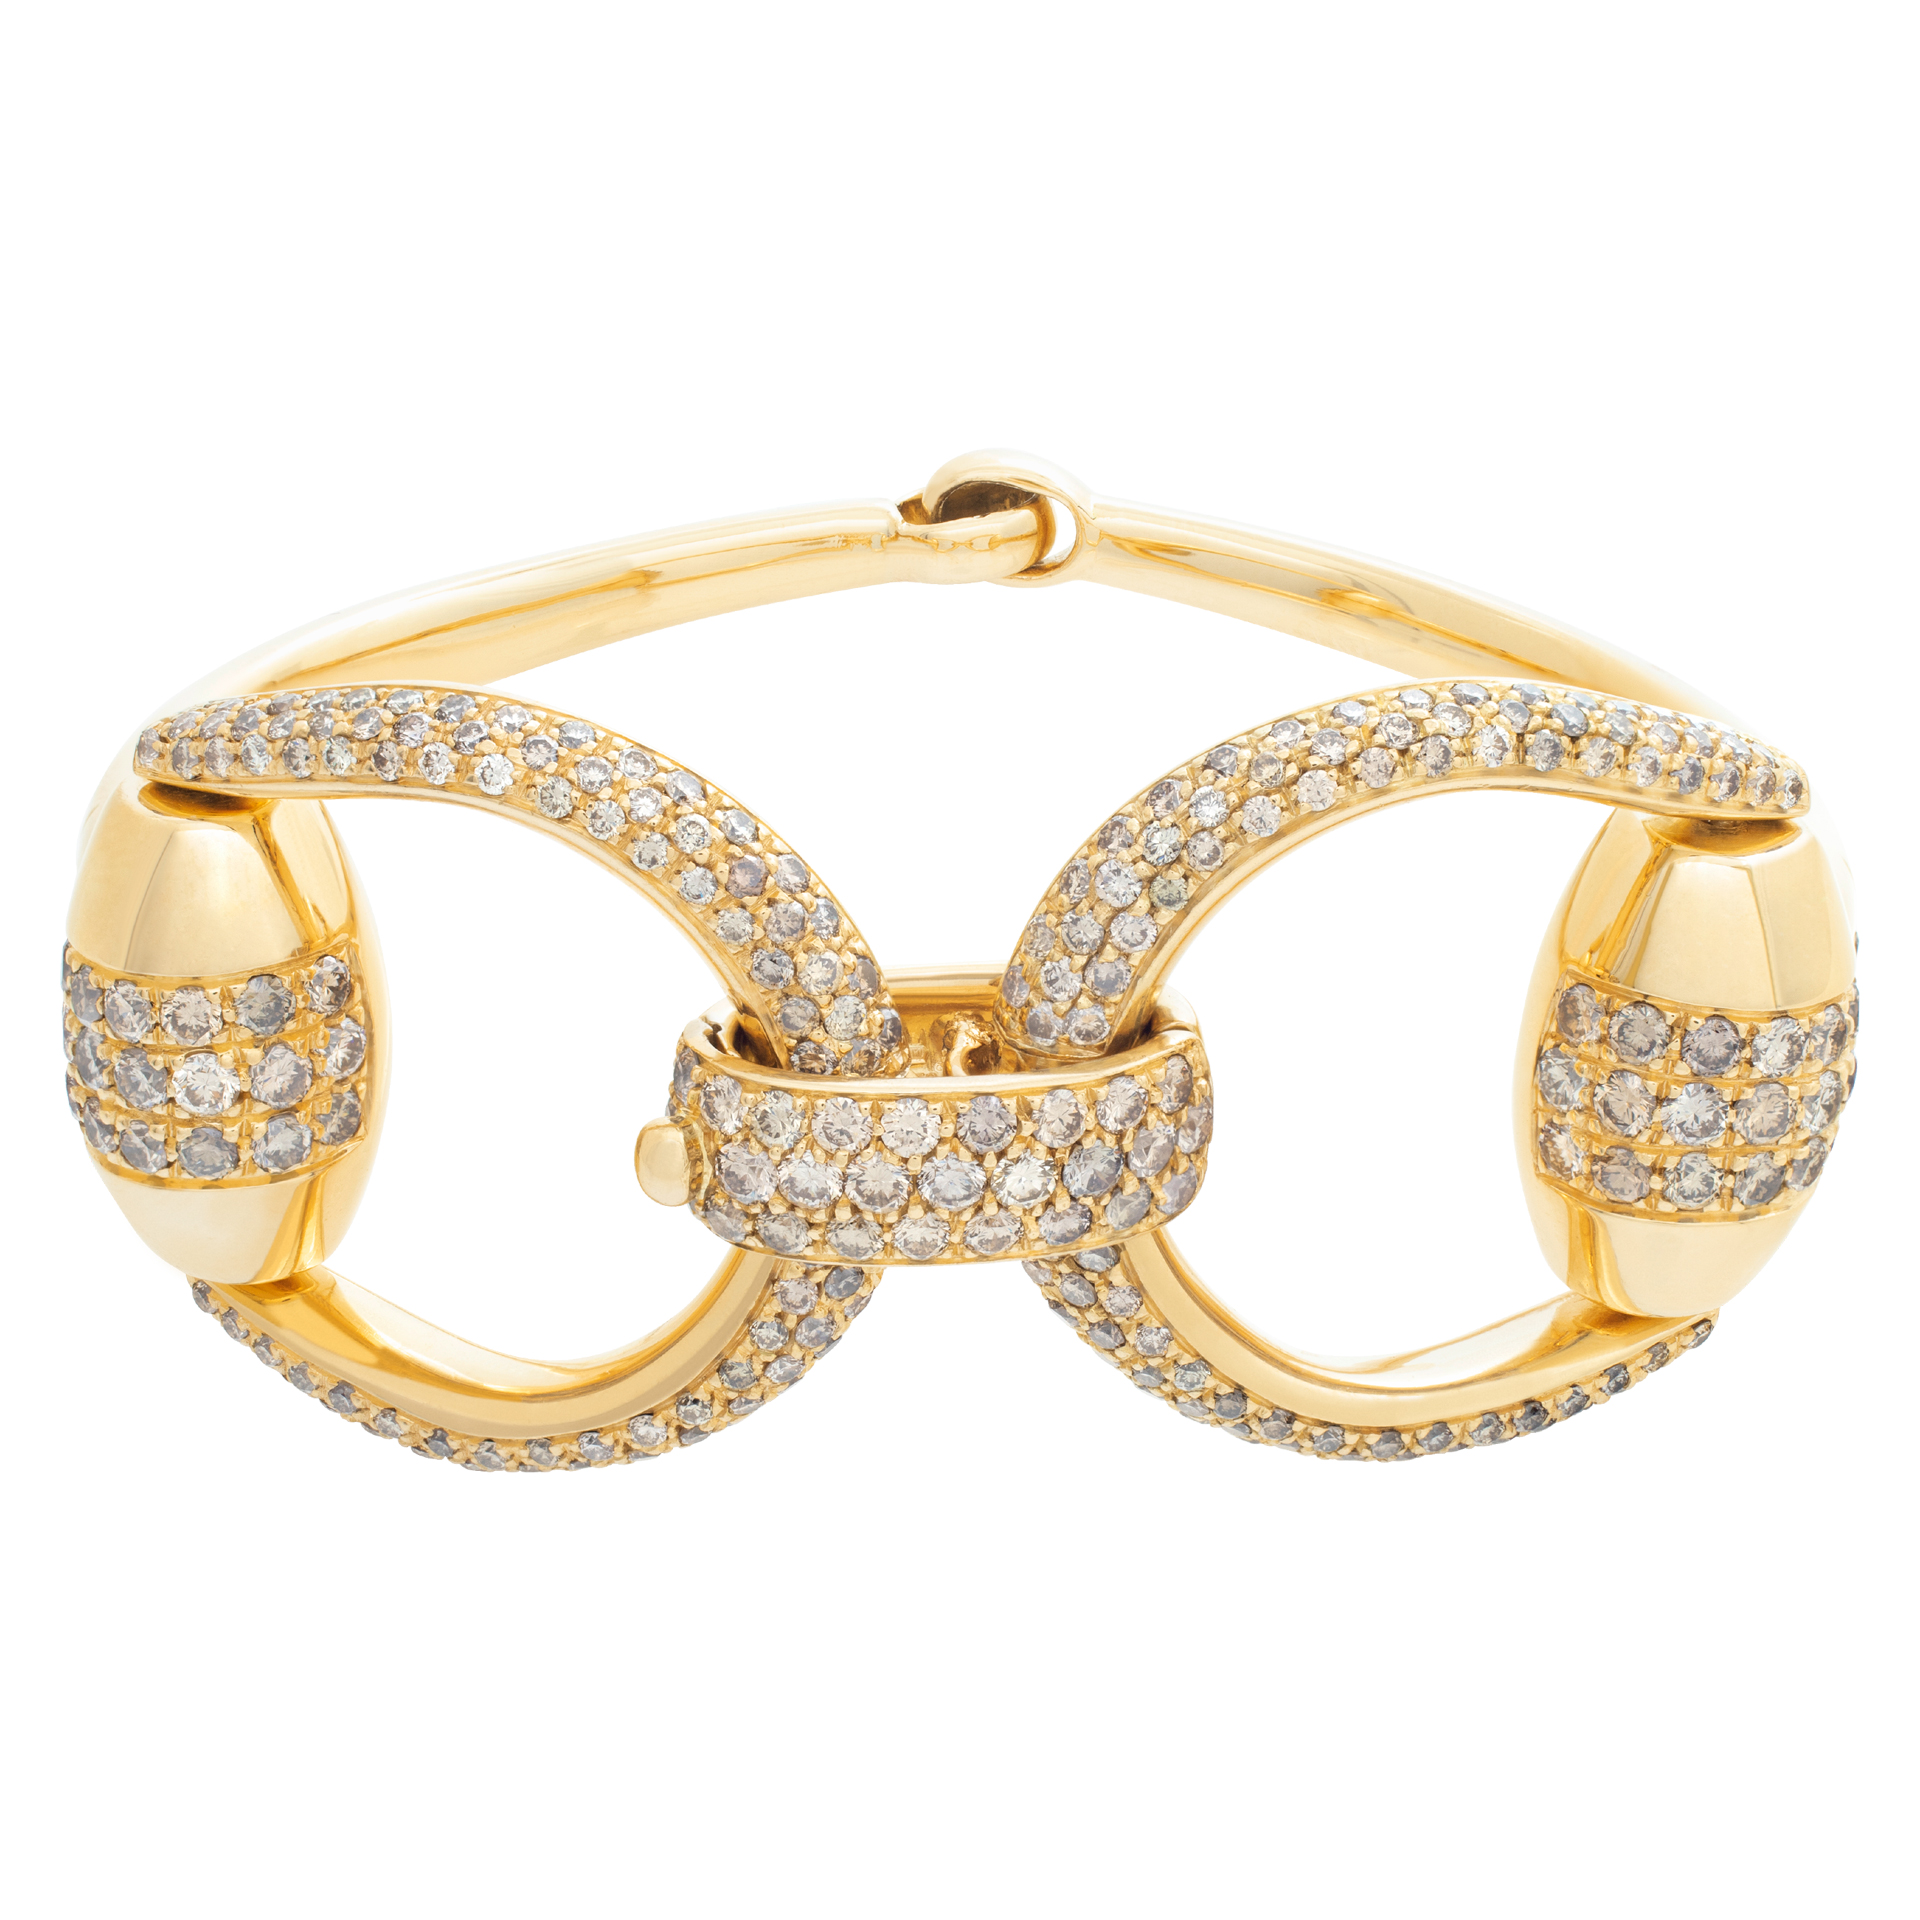 Gucci diamond horsebit bracelet in 18k yellow gold